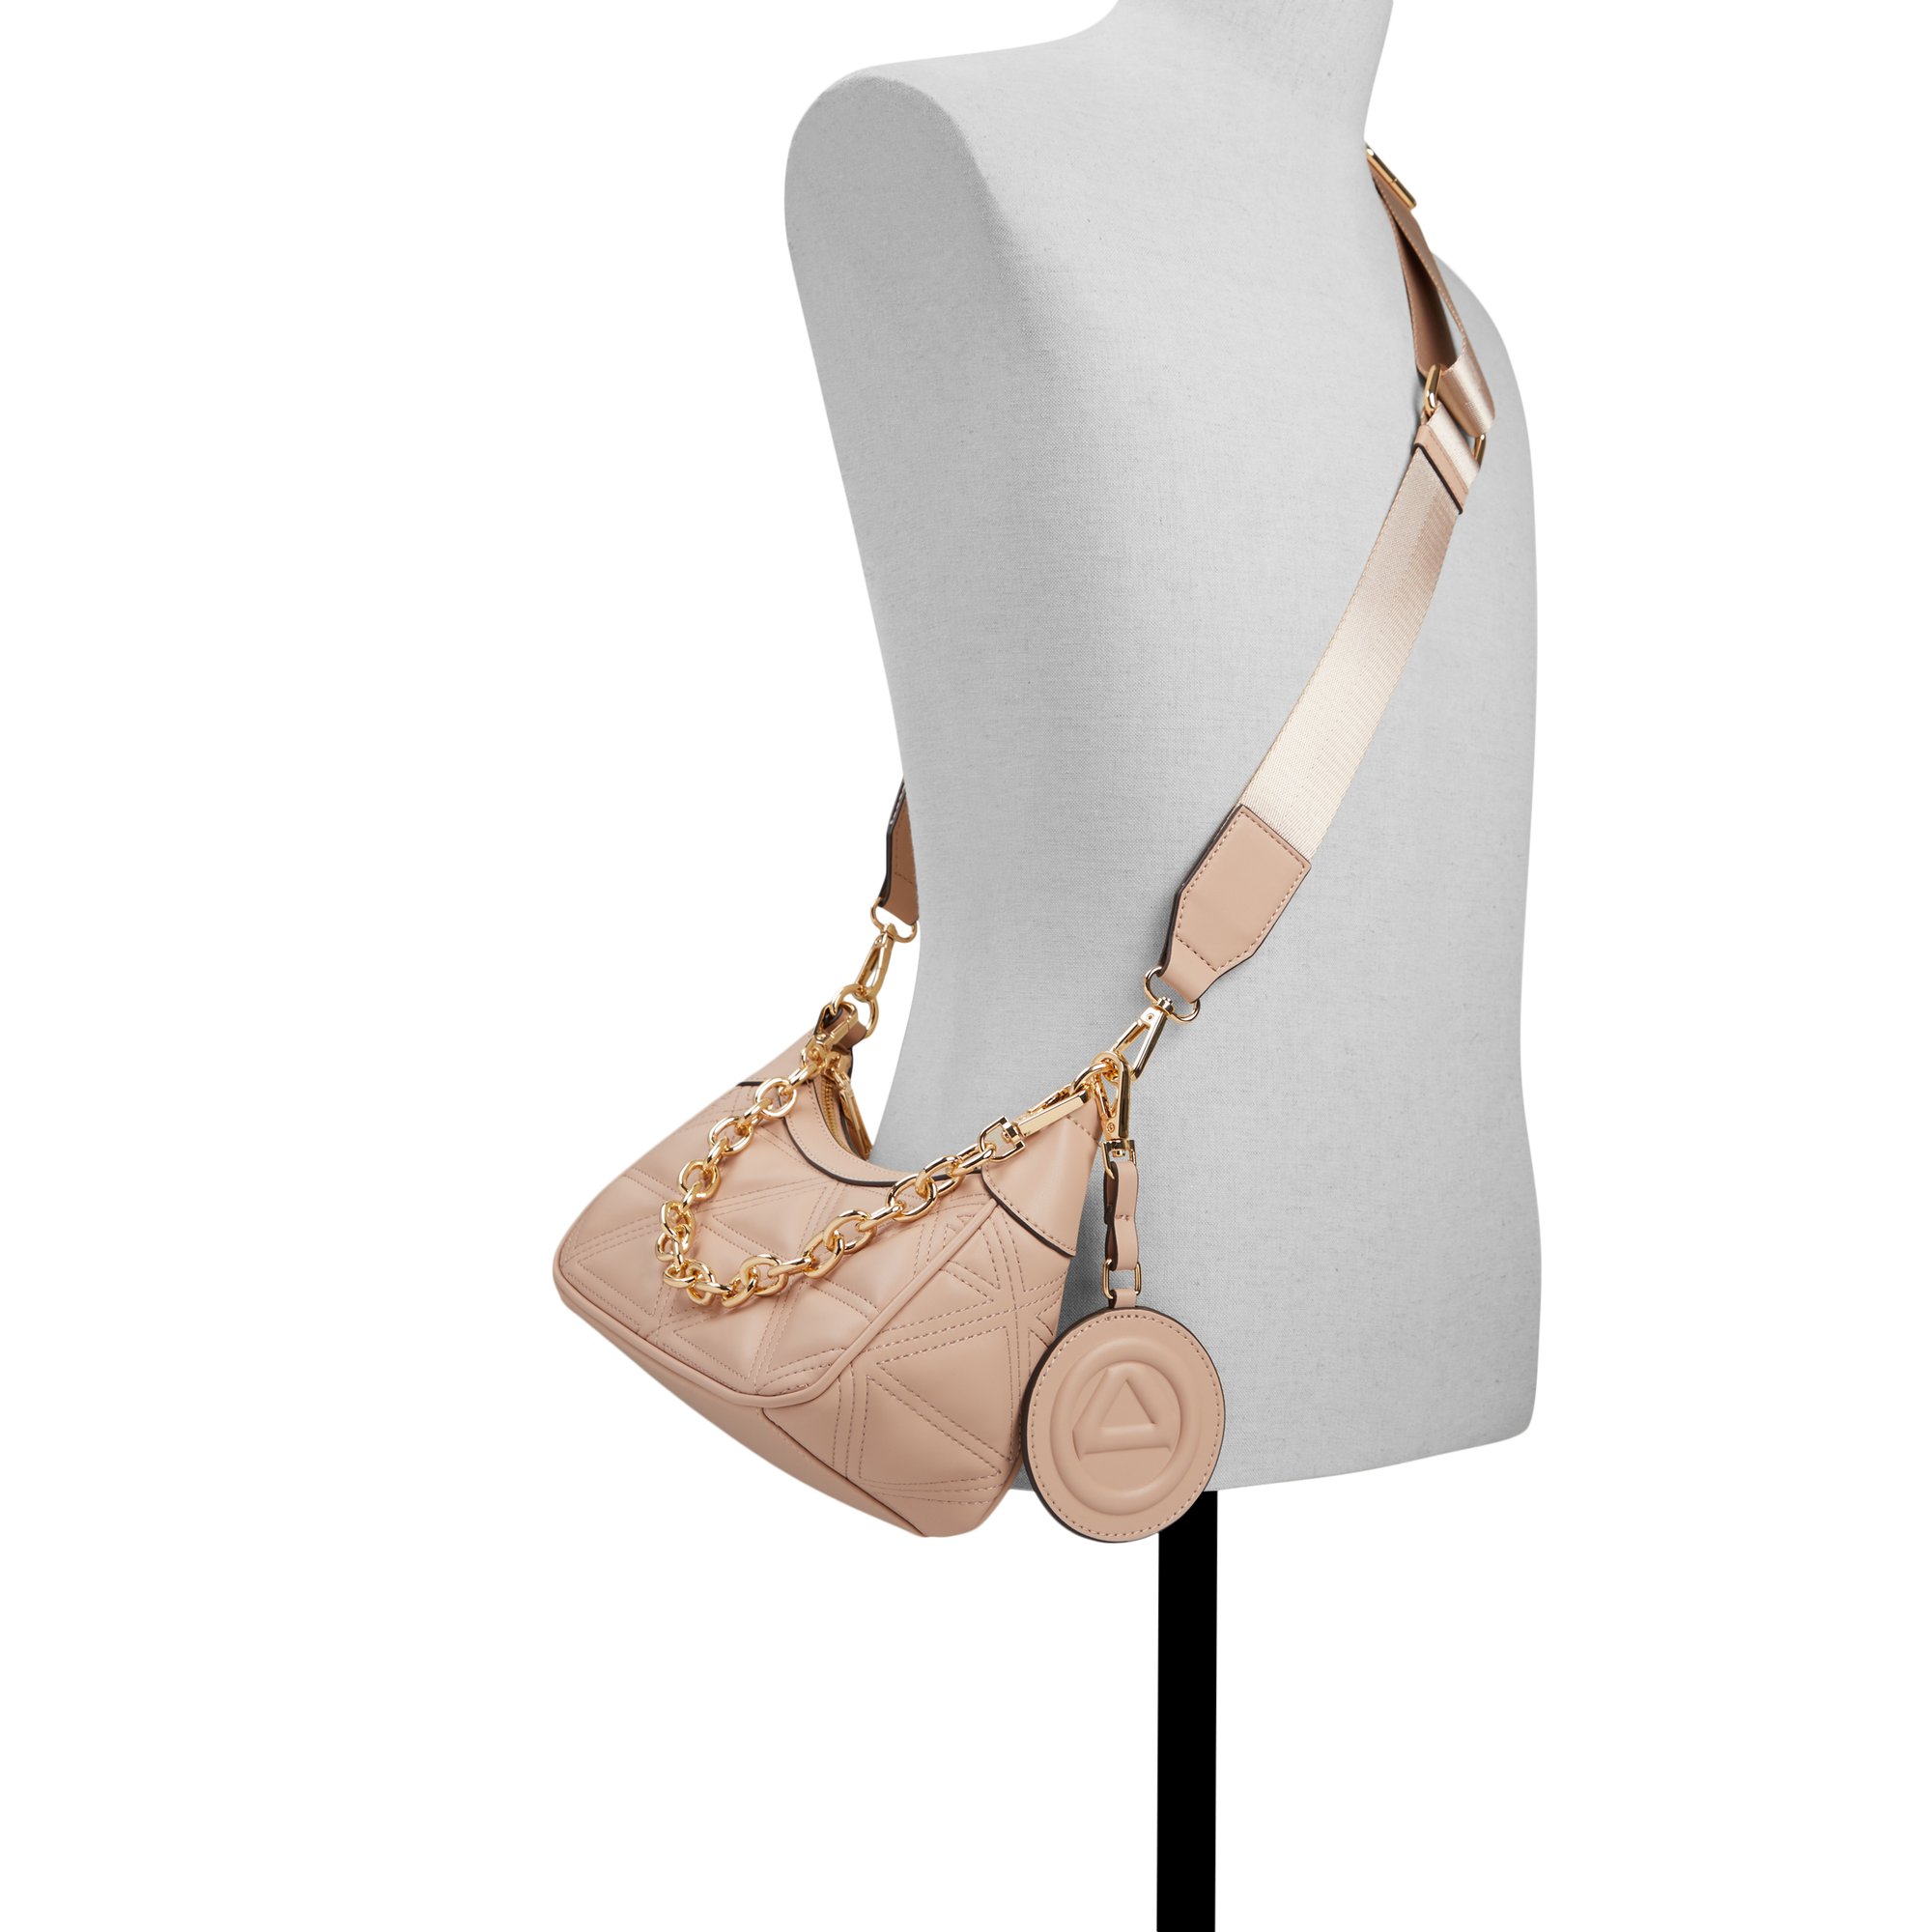 ALDO Ferventtx - Women's Handbags Shoulder Bags